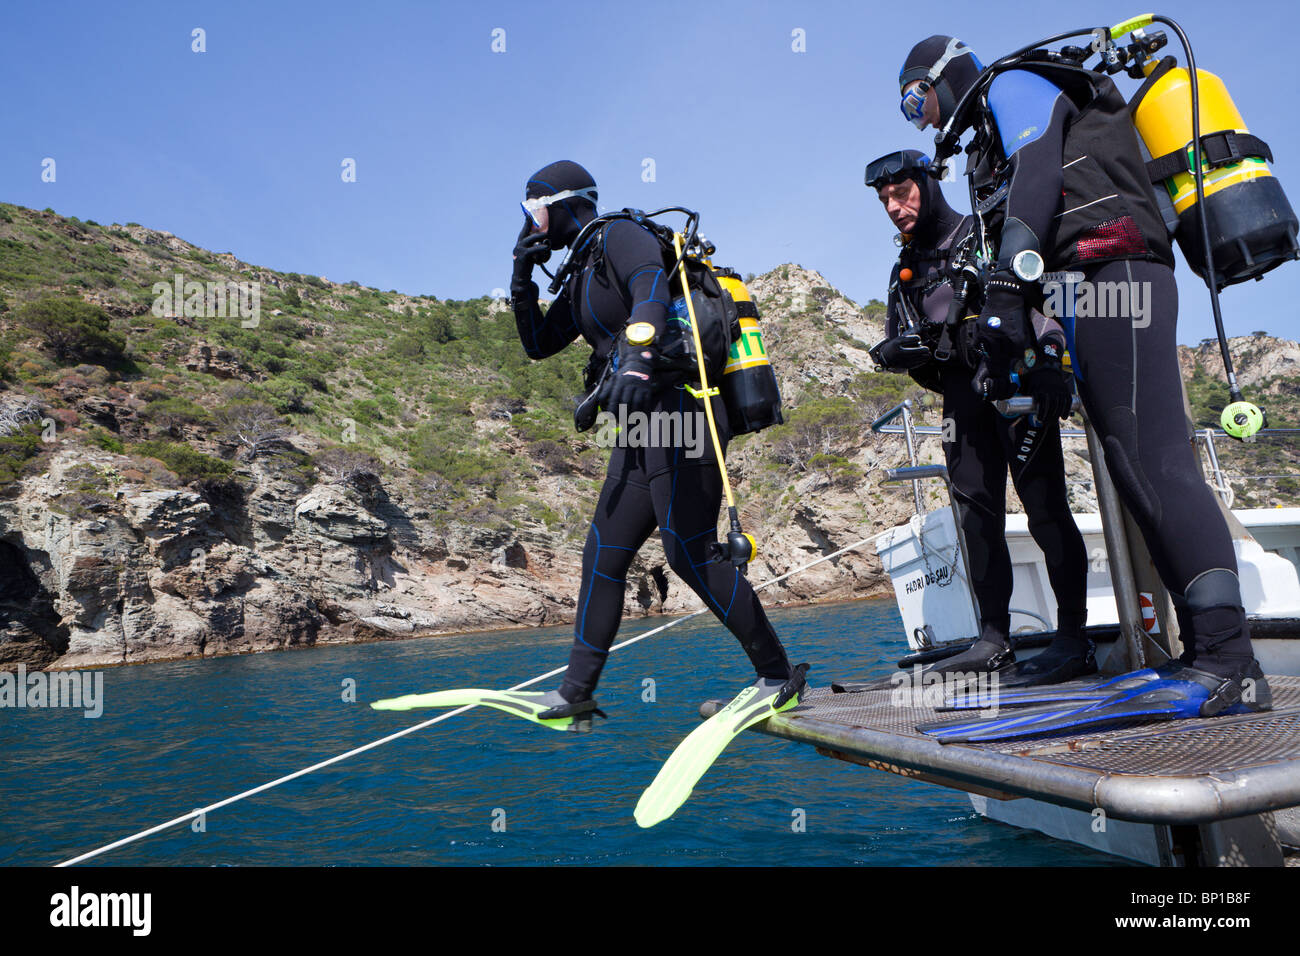 Scuba Diving at Costa Brava, Cap de Creus, Costa Brava, Spain Stock Photo